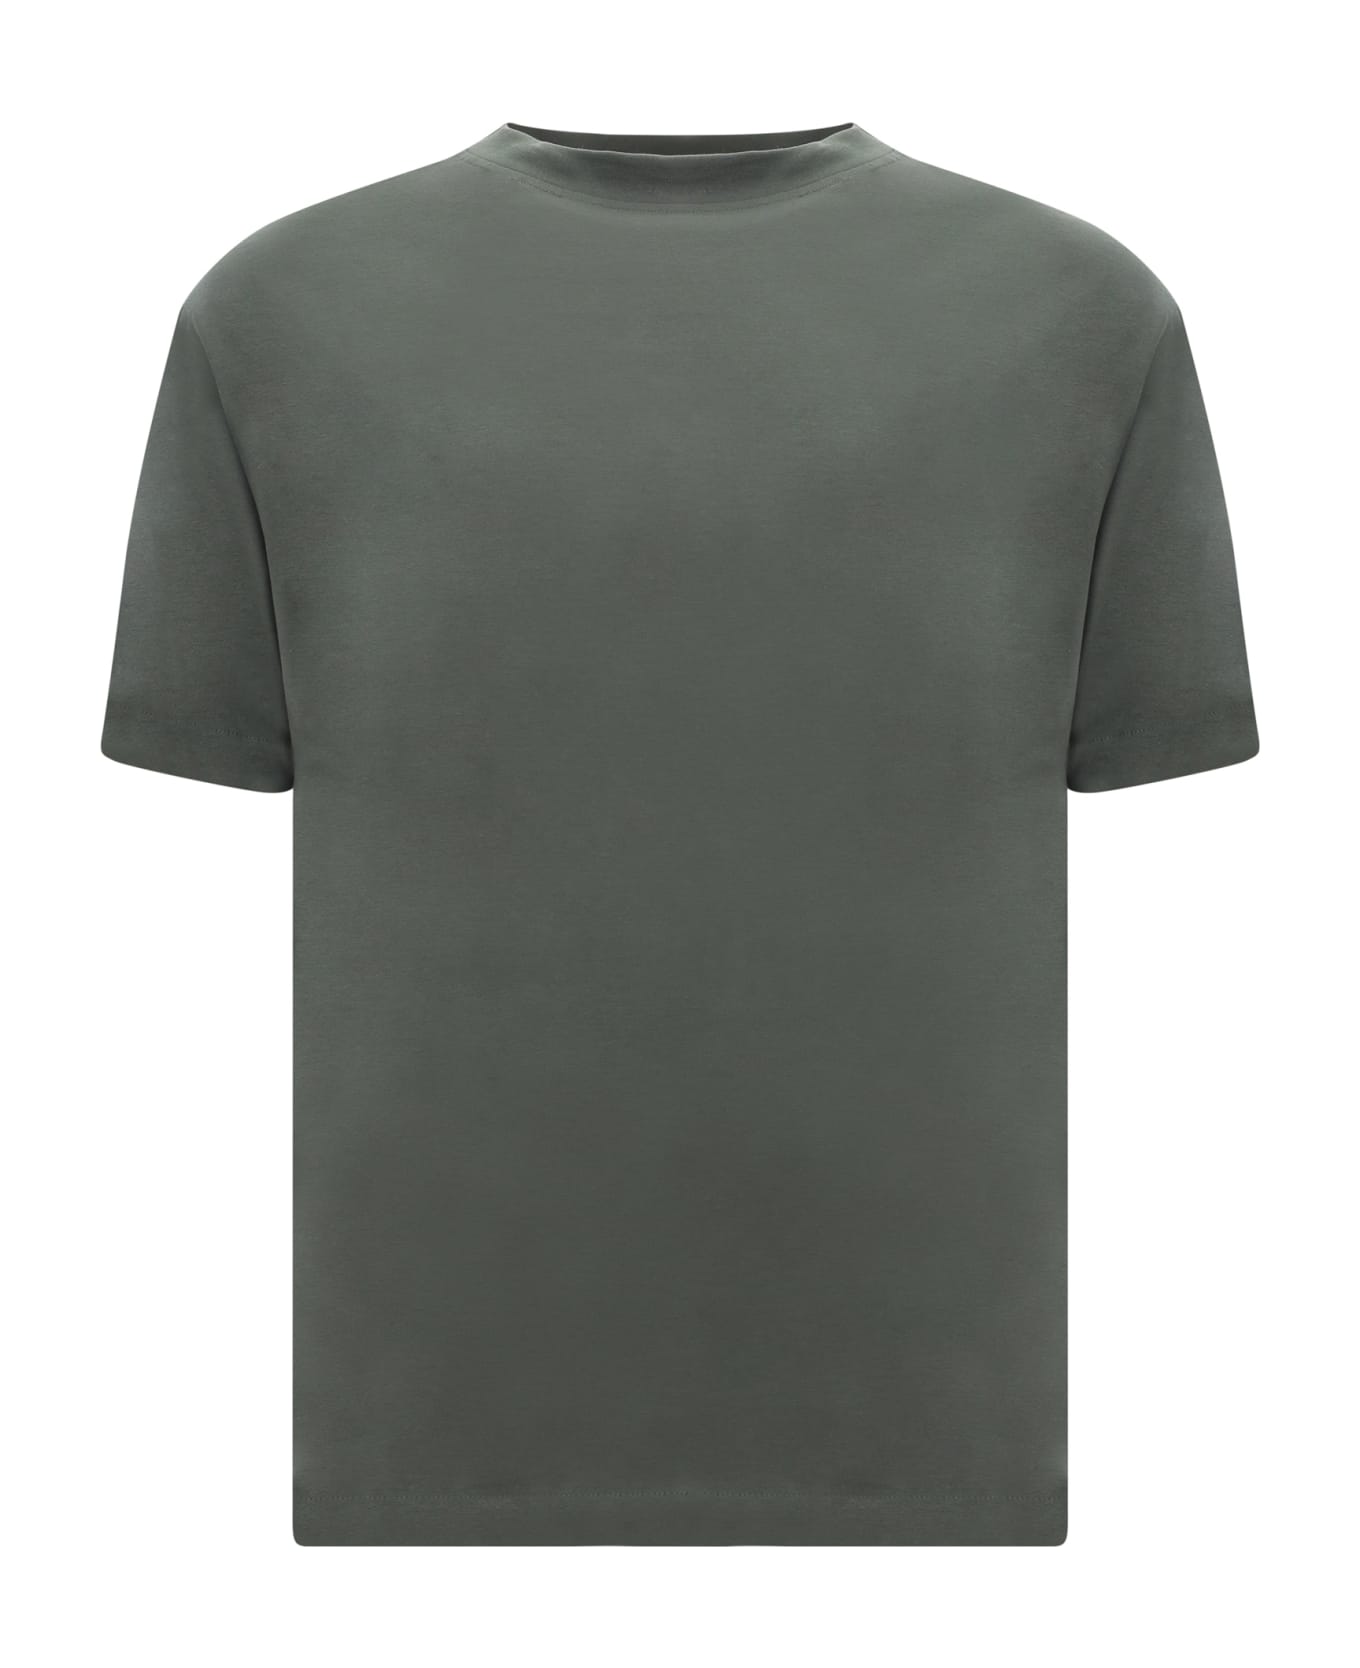 Cruciani T-shirt - 41010006